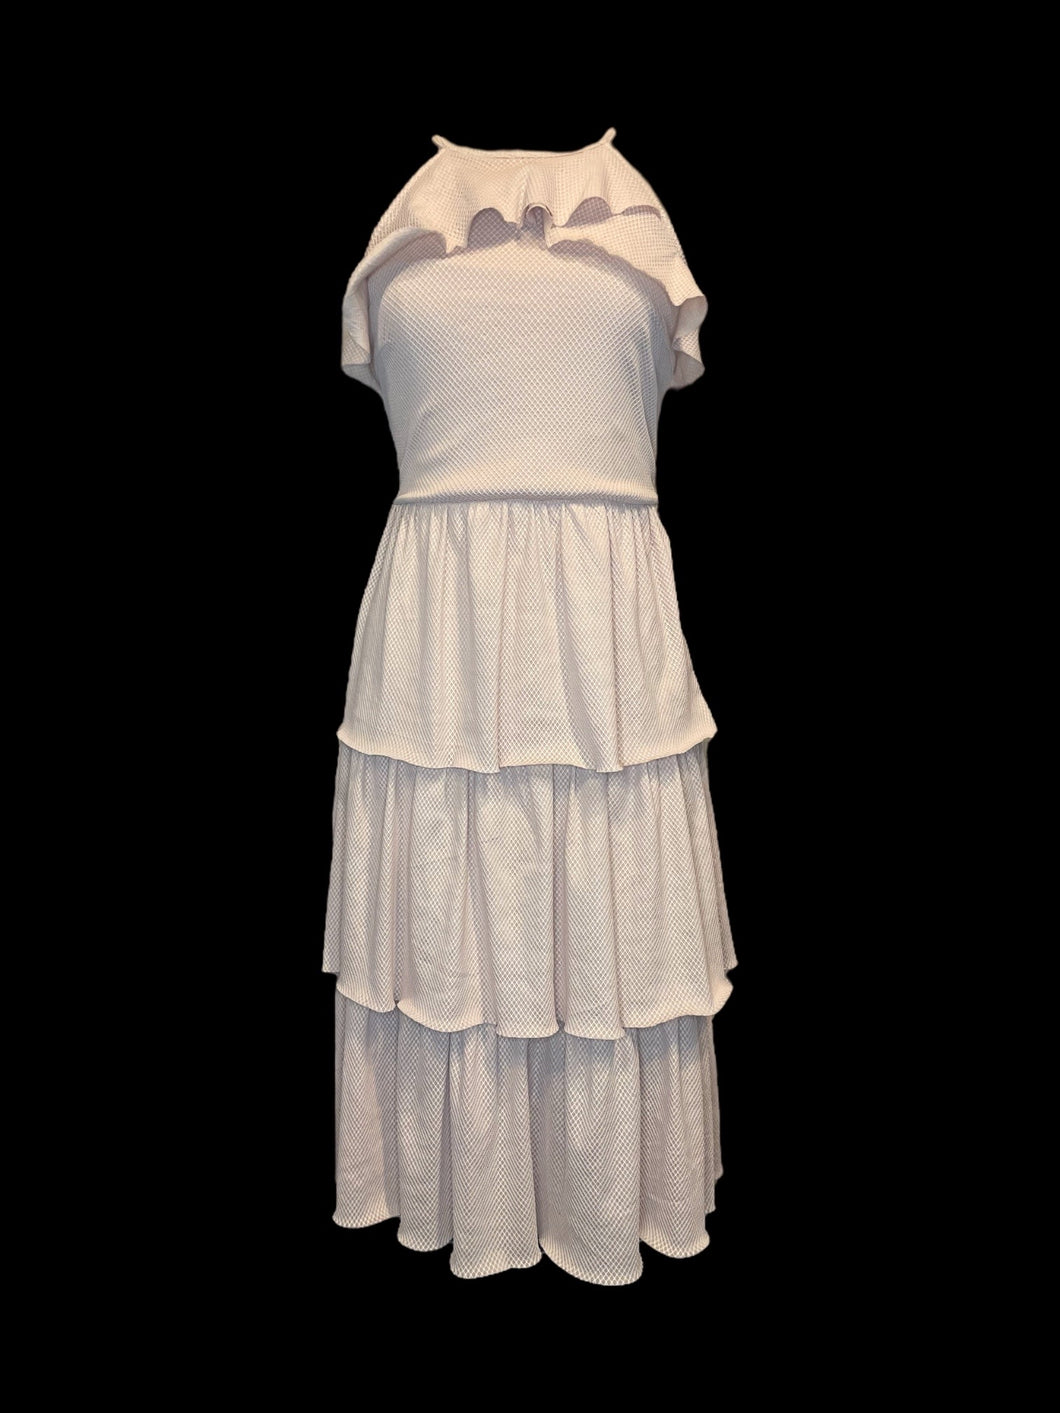 M Dusty rose faux mesh sleeveless high neckline tiered maxi dress w/ tie keyhole detail, & zipper closure